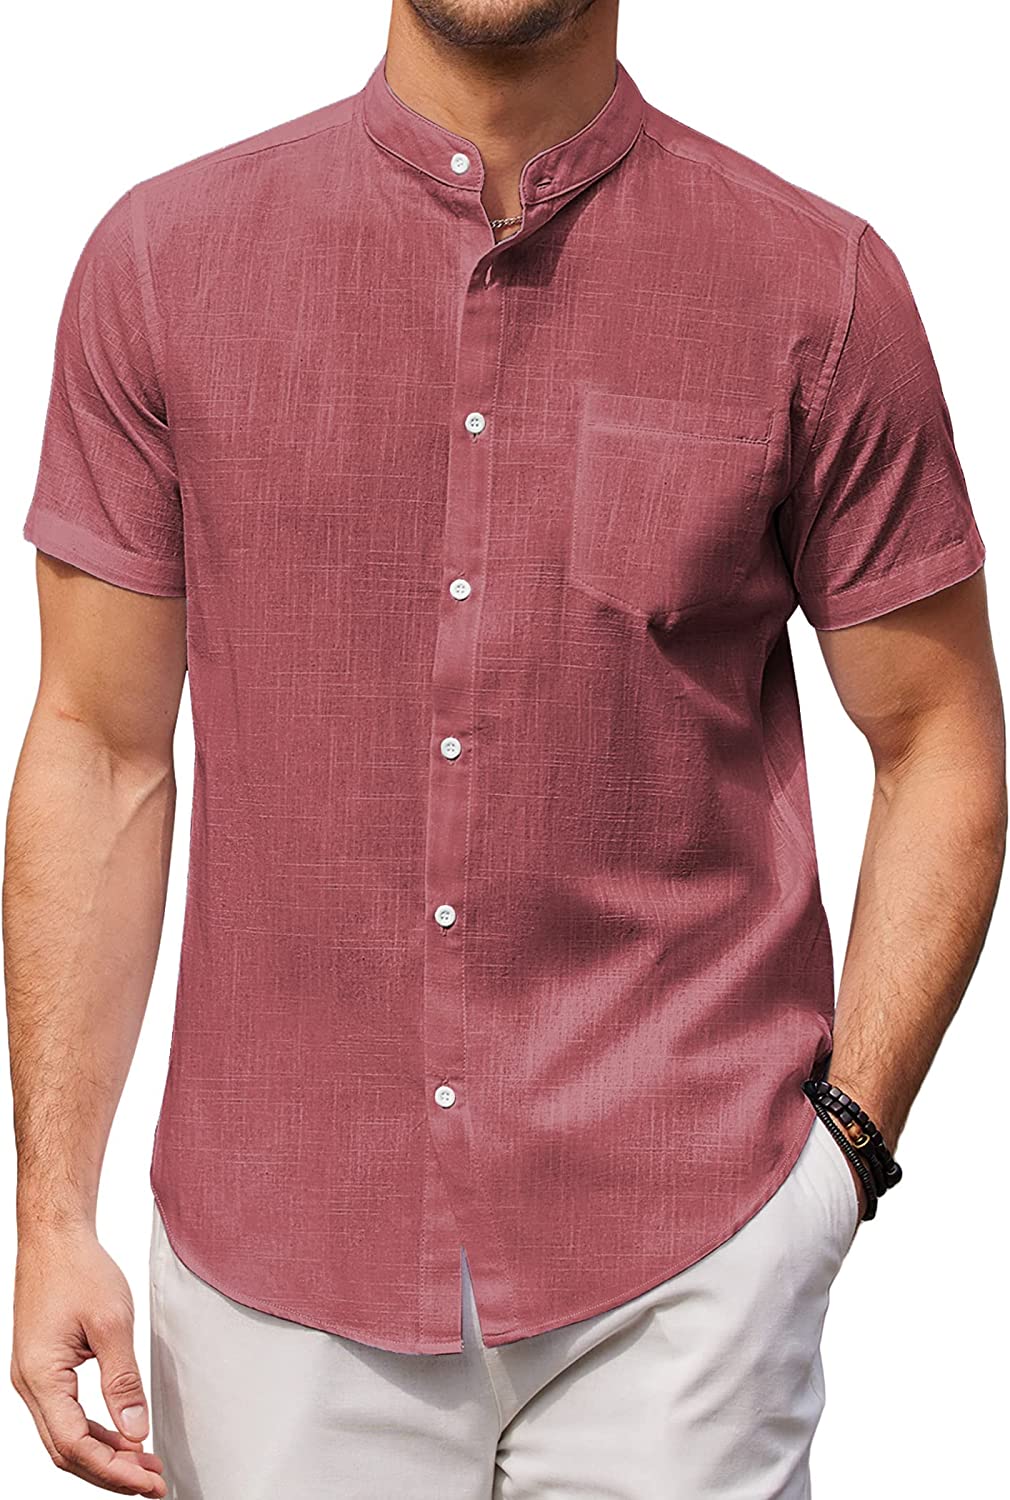 COOFANDY Men's Banded Collar Beach Shirt Cotton Linen Casual Button Down  Short S